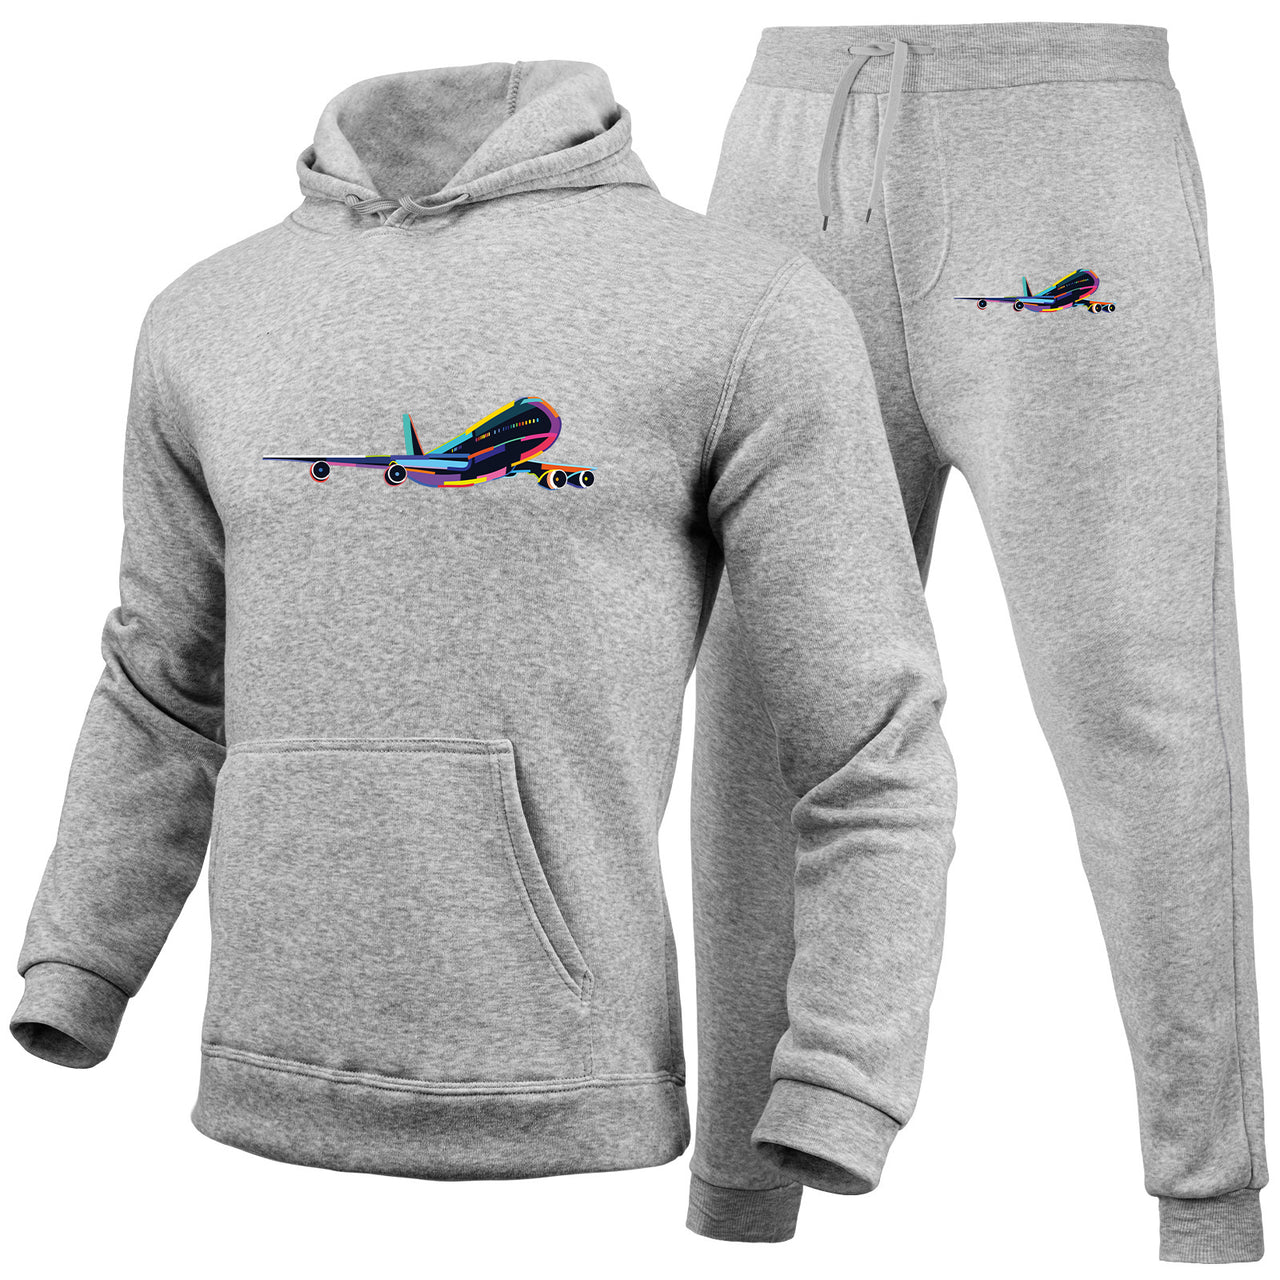 Multicolor Airplane Designed Hoodies & Sweatpants Set